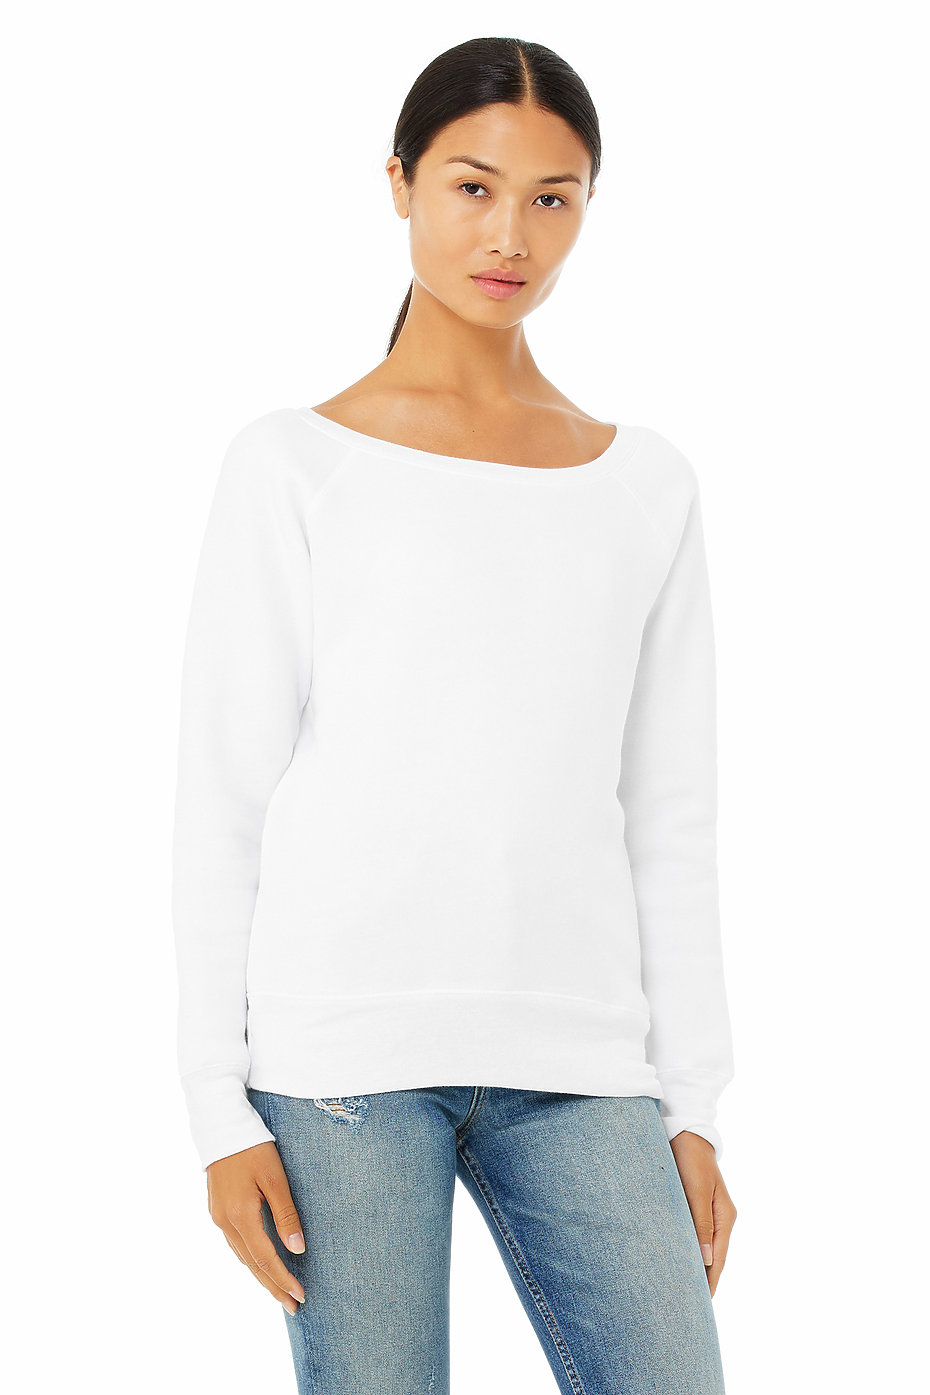 Active Wear sweatshirt discount 72% Multicolored M WOMEN FASHION Jumpers & Sweatshirts Sweatshirt Hoodless 